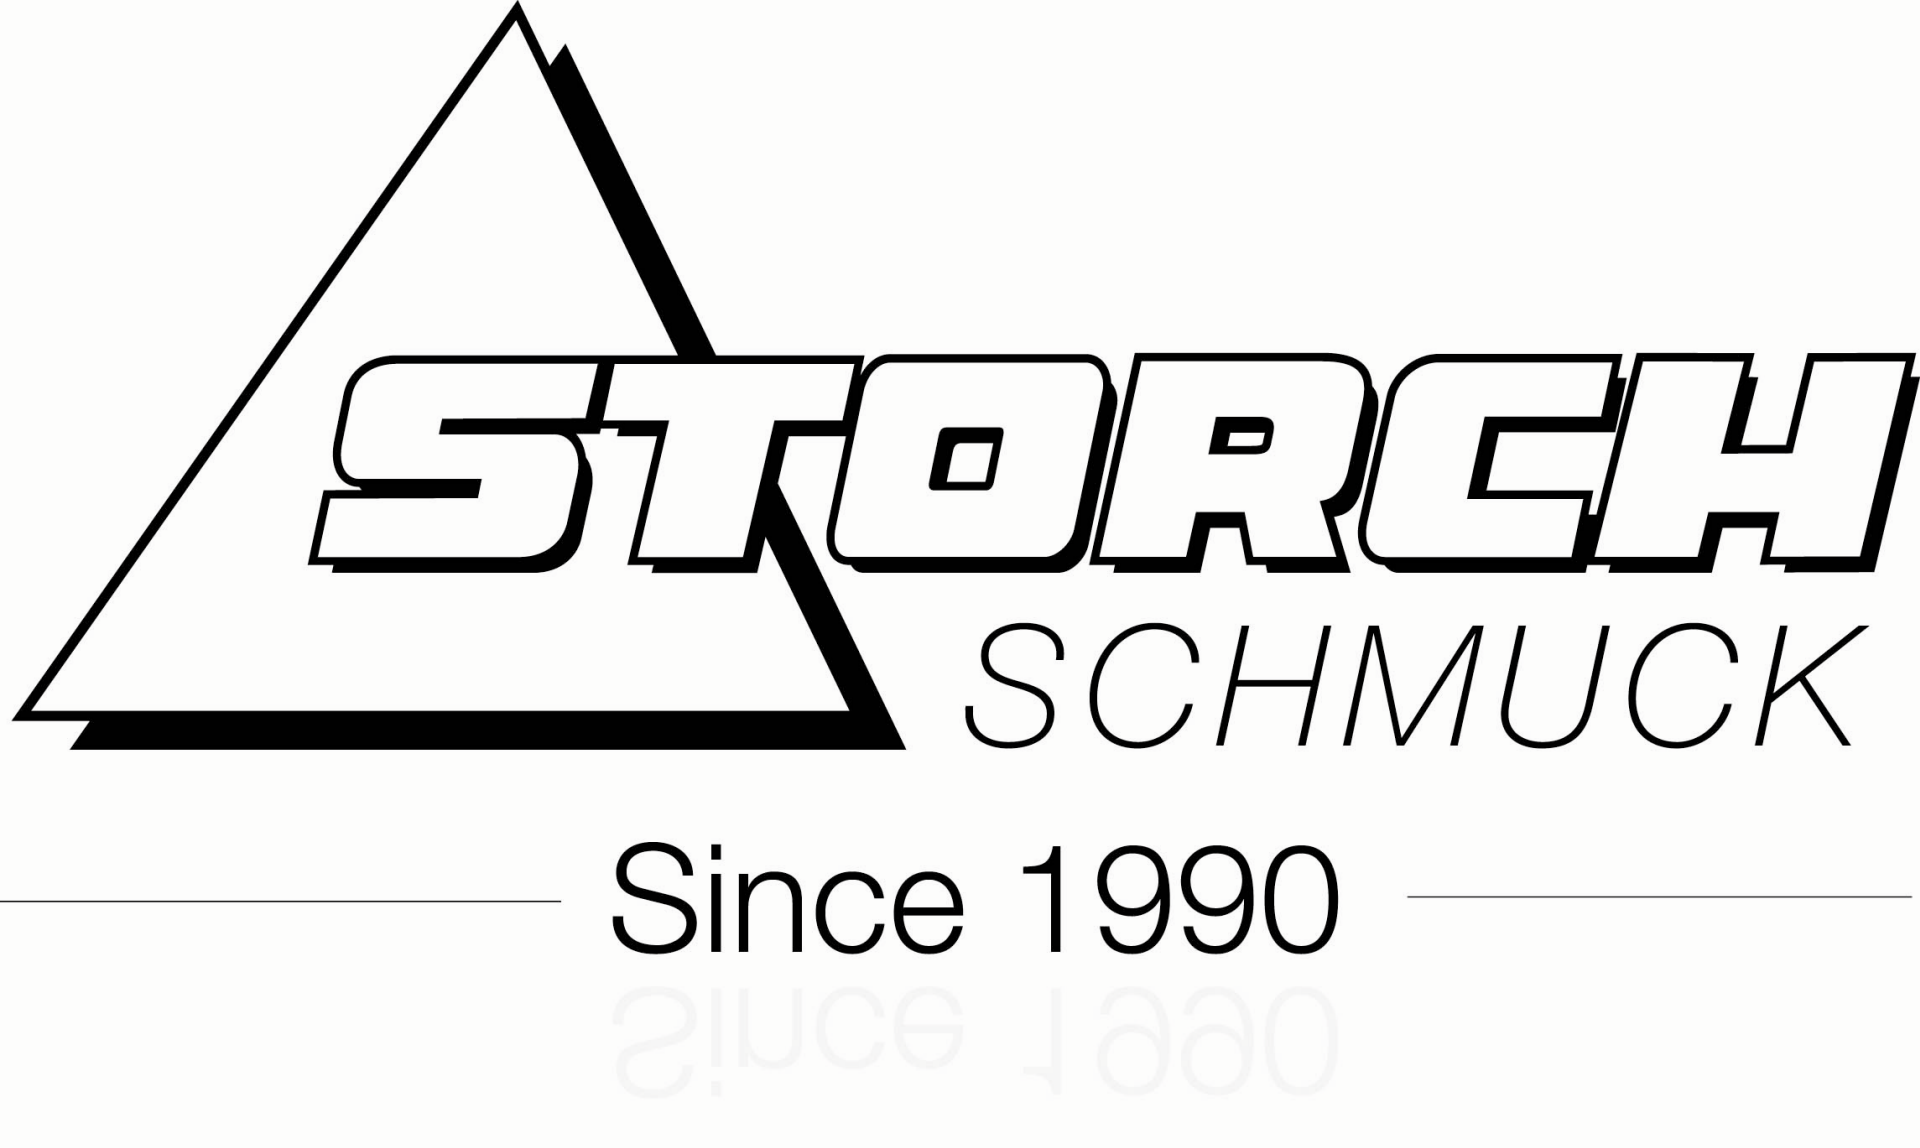 Storch-Schmuck e.k.
Inh. Marc-Gregor Storch
Schmuckgroßhandel